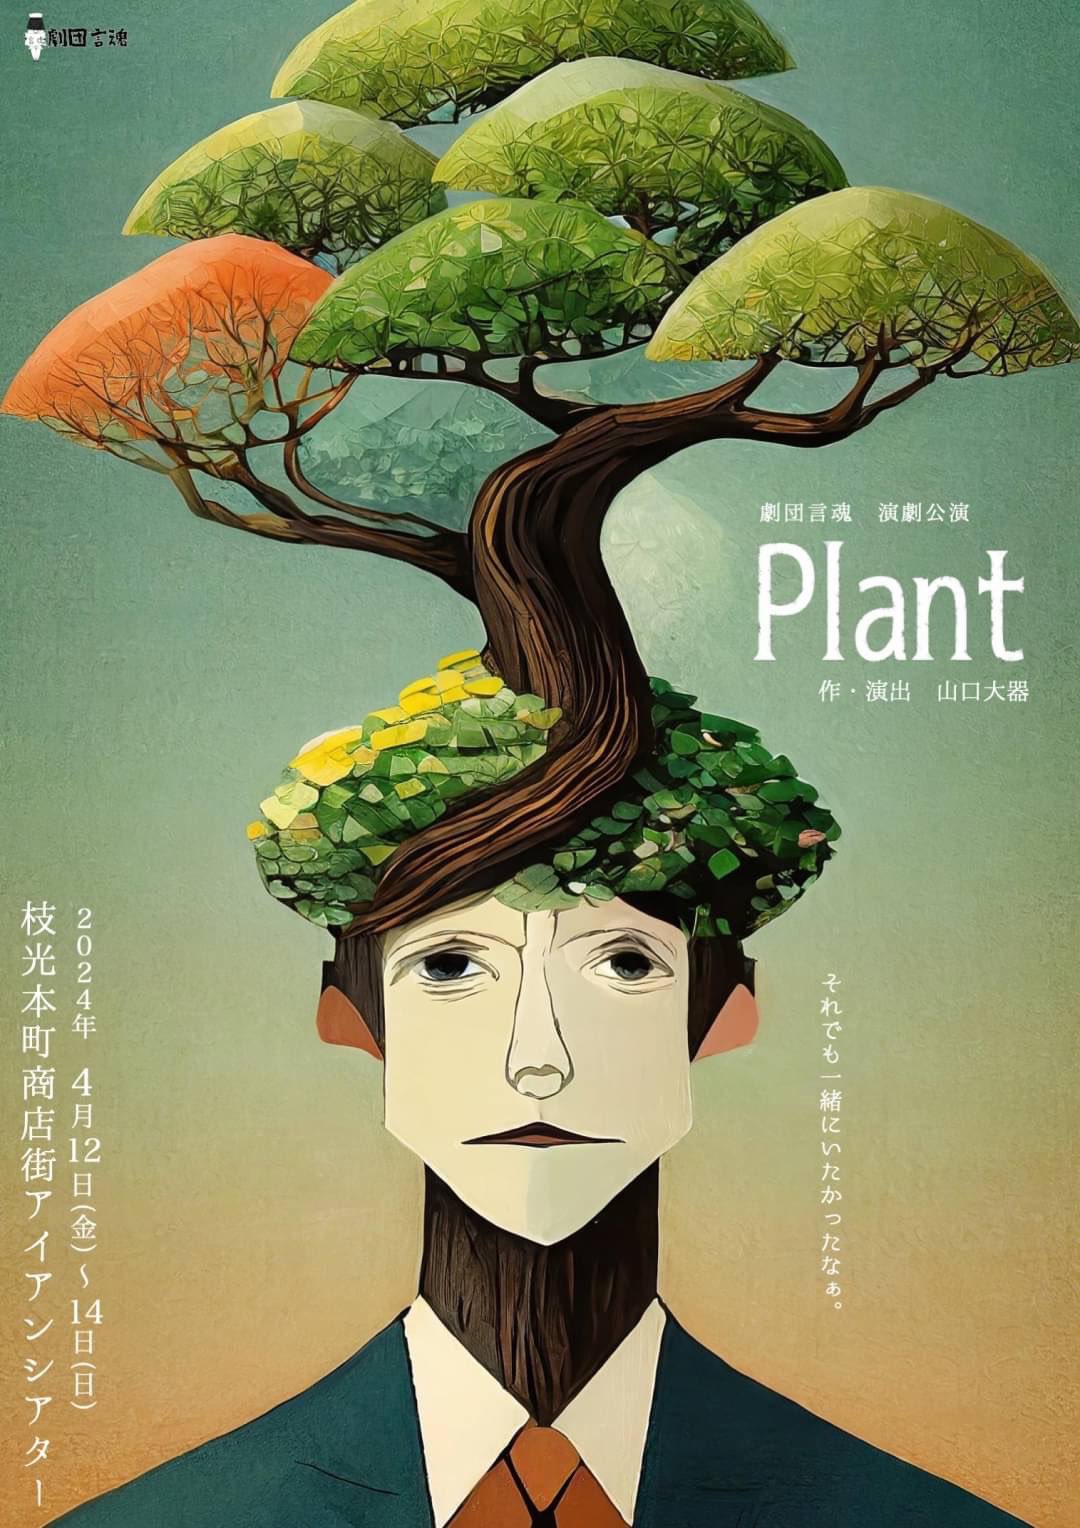 劇団言魂「Plant」